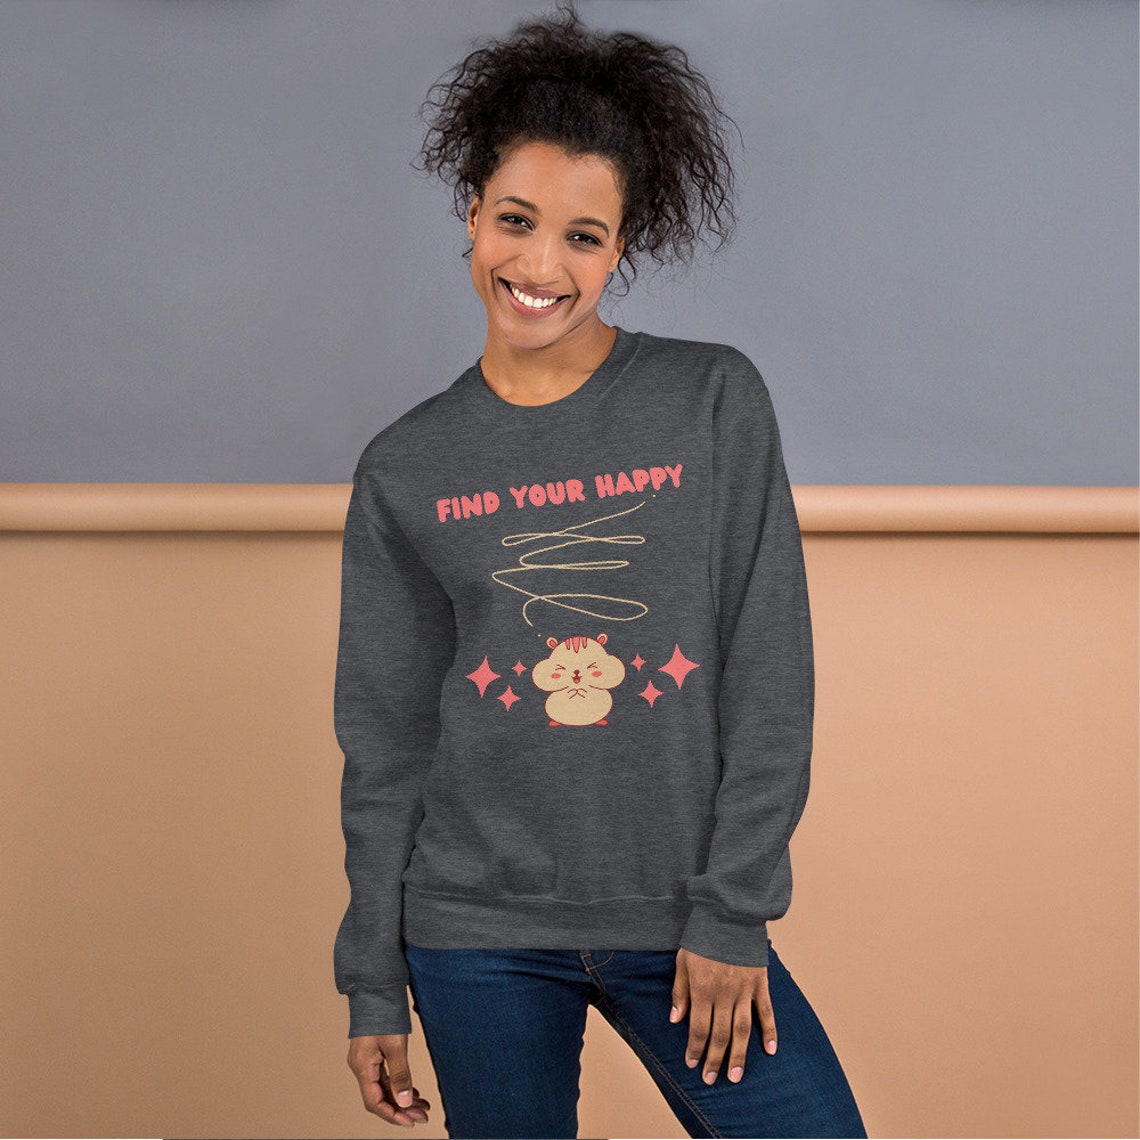 Find your happy sweatshirt happiness sweatshirt Cute | Etsy